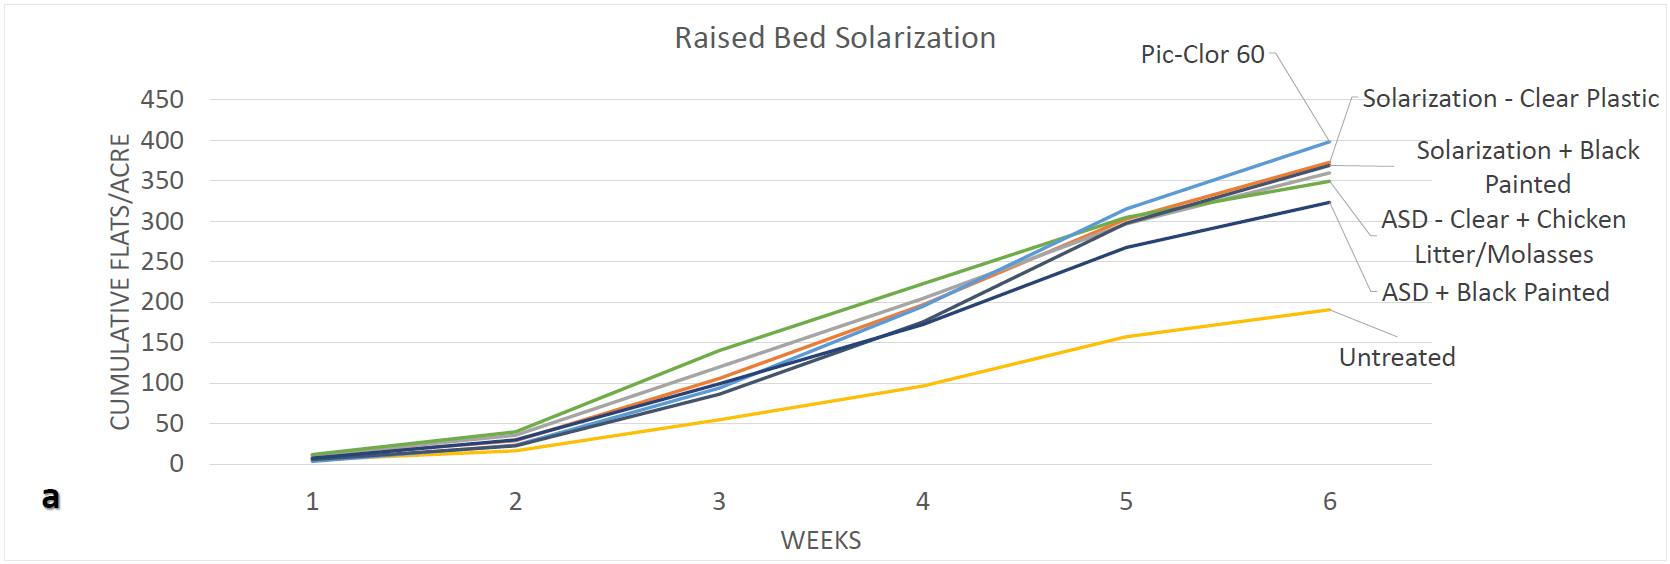 Ag Metrics Group - Raised Bed Solarization